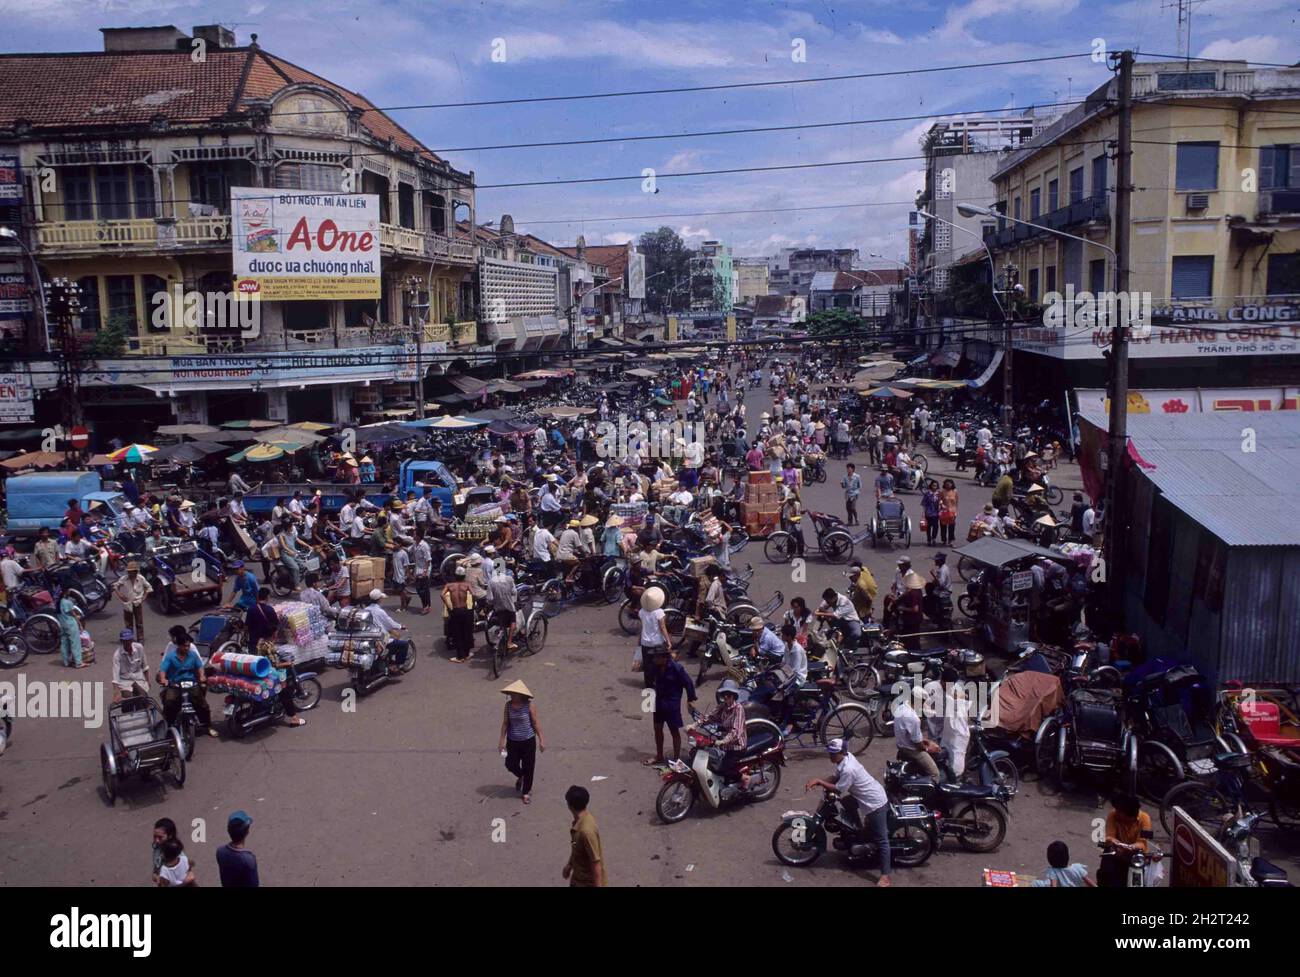 Street scene in 1994 before cars popular, Cholon market area, Ho Chi Minh City, Vietnam Stock Photo